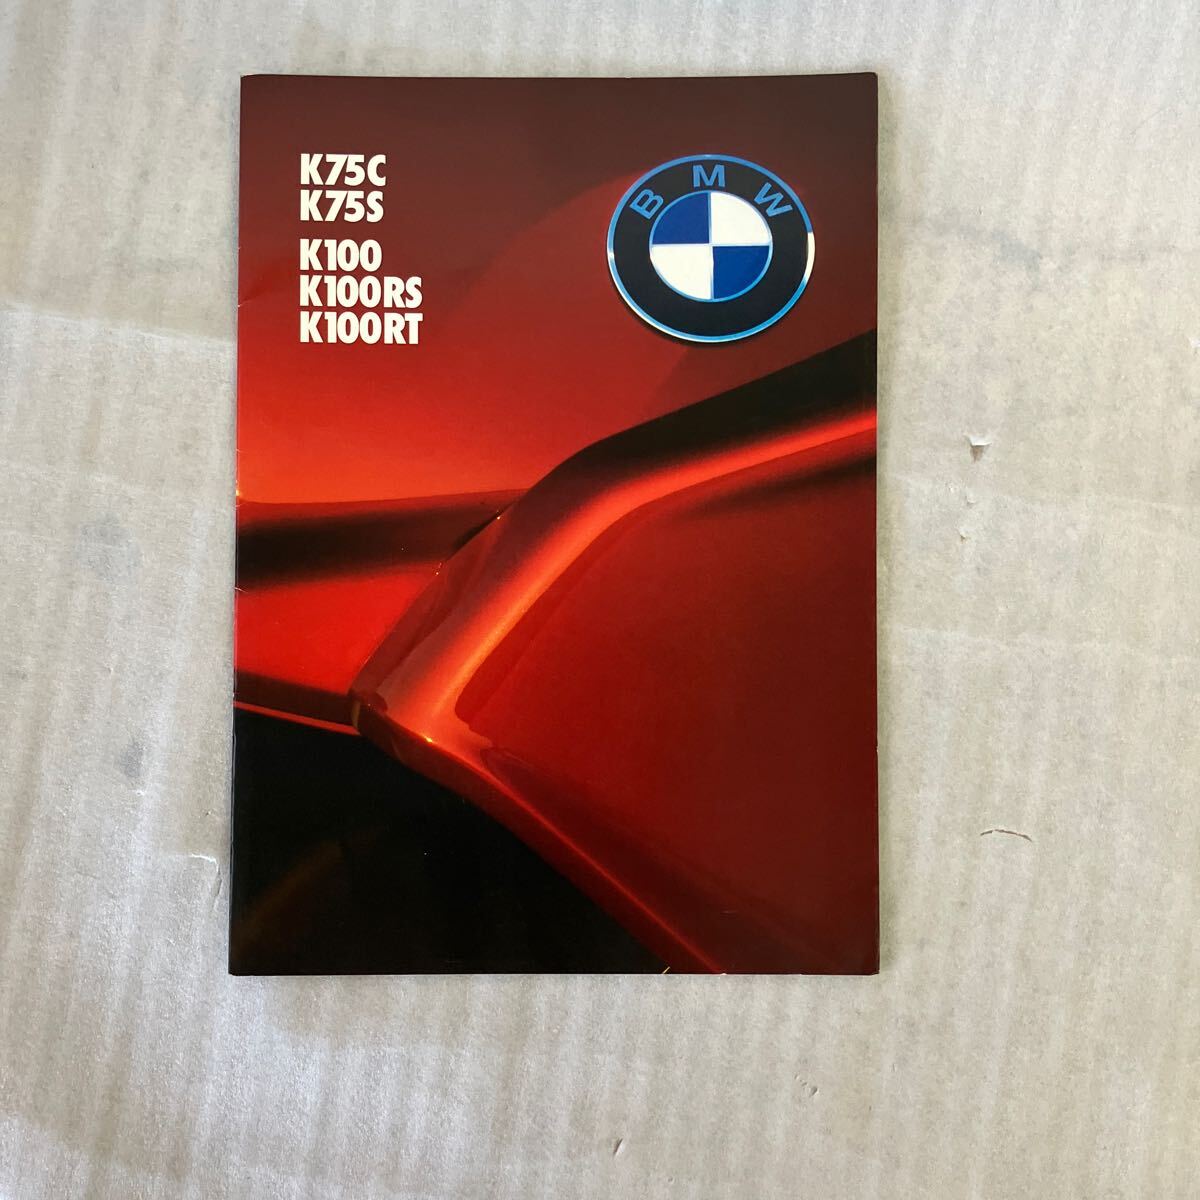 BMW K75C,K75S,K100,K100RS,K100RT カタログ _画像1